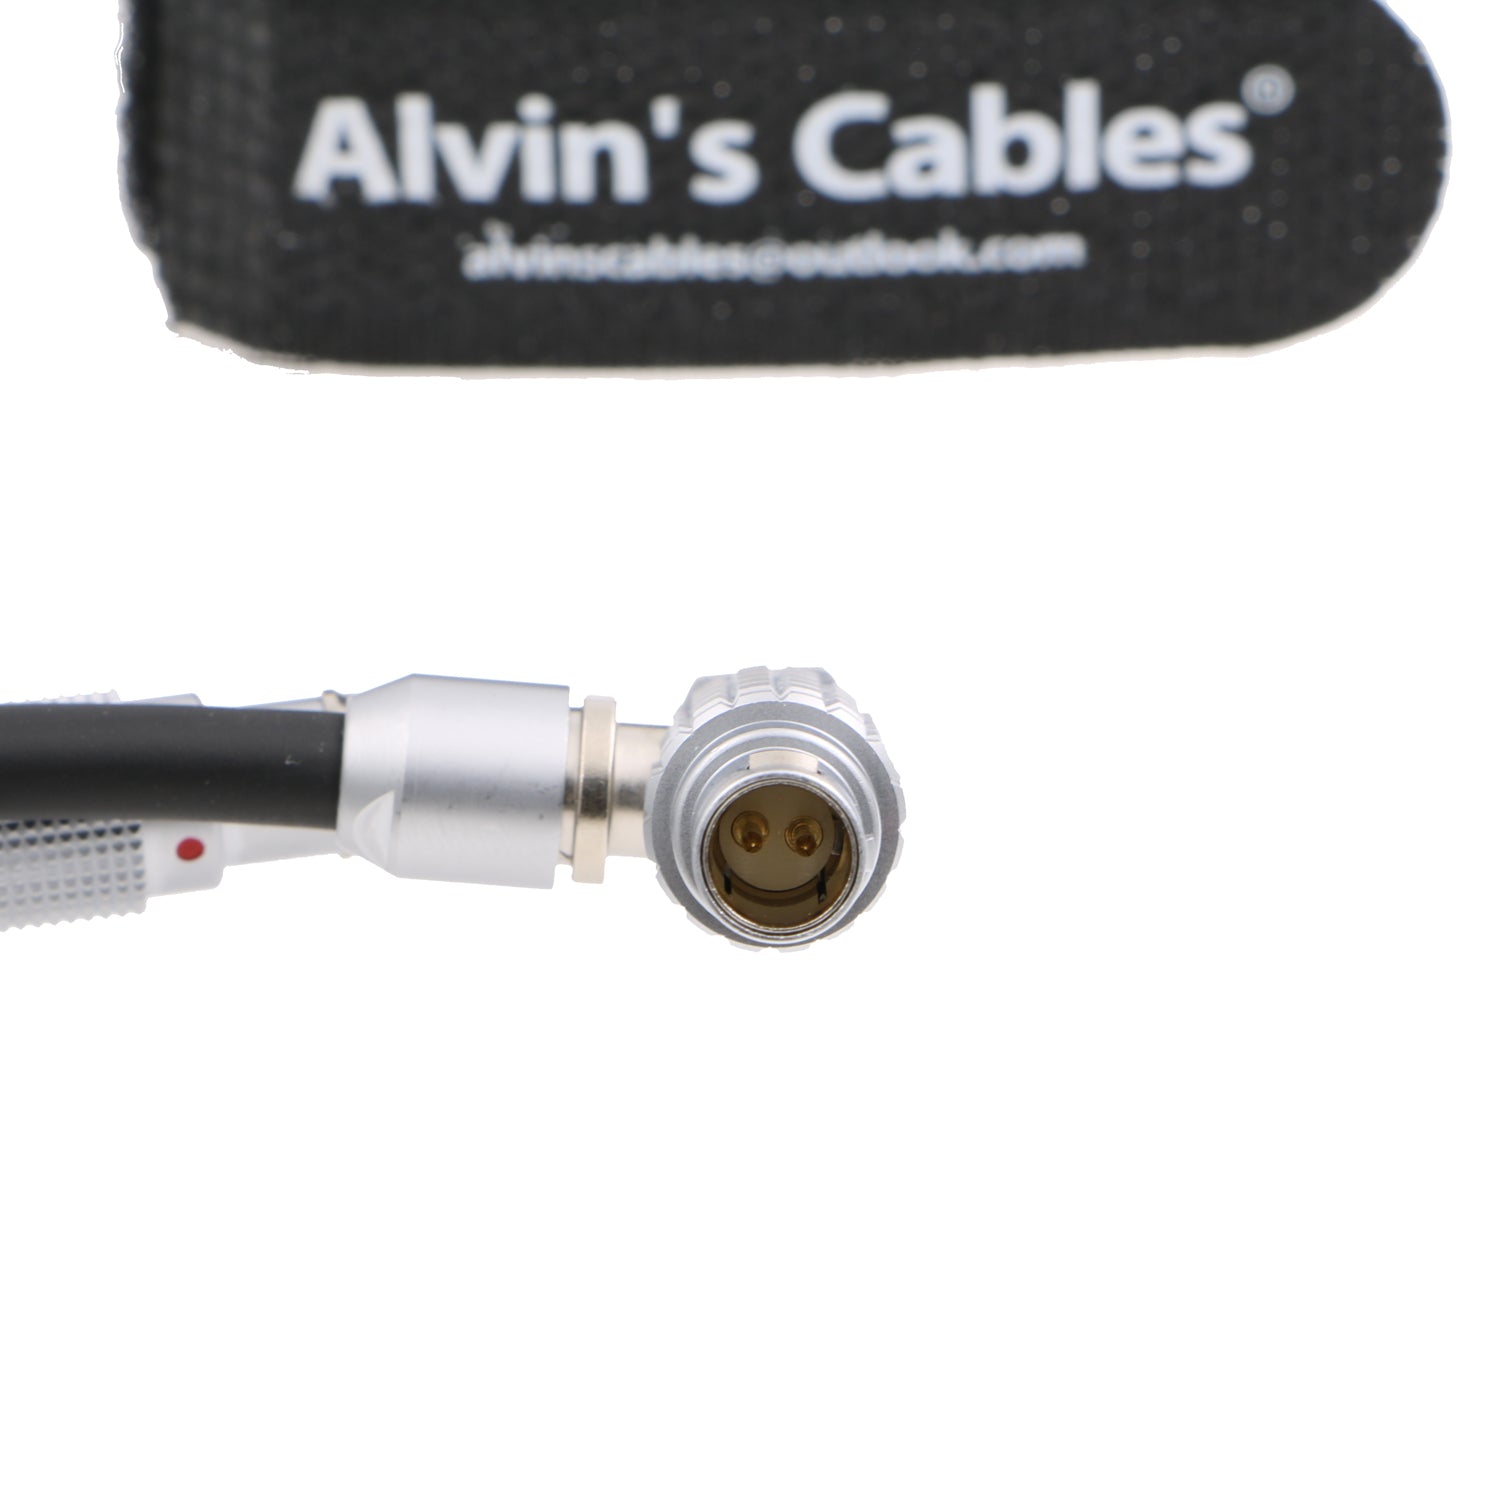 Teradek-Bolt-Wireless Power-Cable for SmallHD-702-Bright Rotatable-2-Pin Right-Angle to 2Pin Male Cord for ARRI-Alexa Camera Alvin's Cables